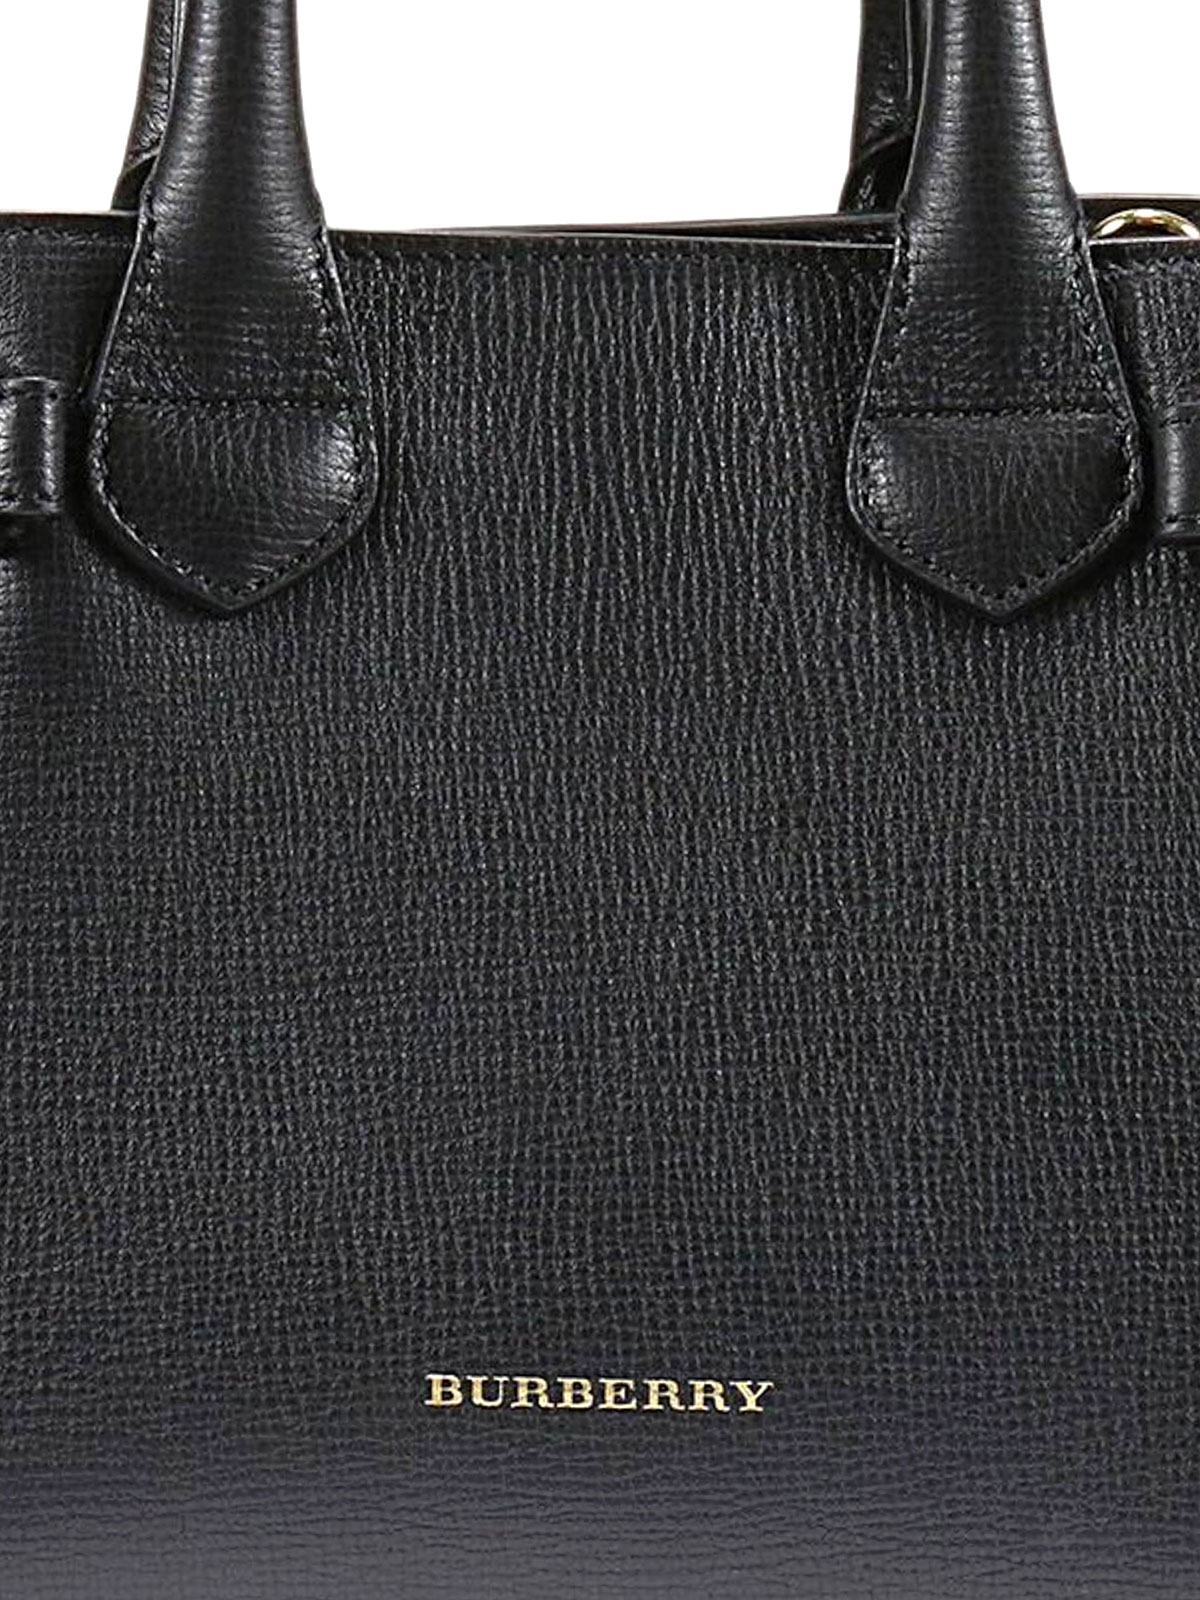 Cross body bags Burberry - Banner bag - 40140711